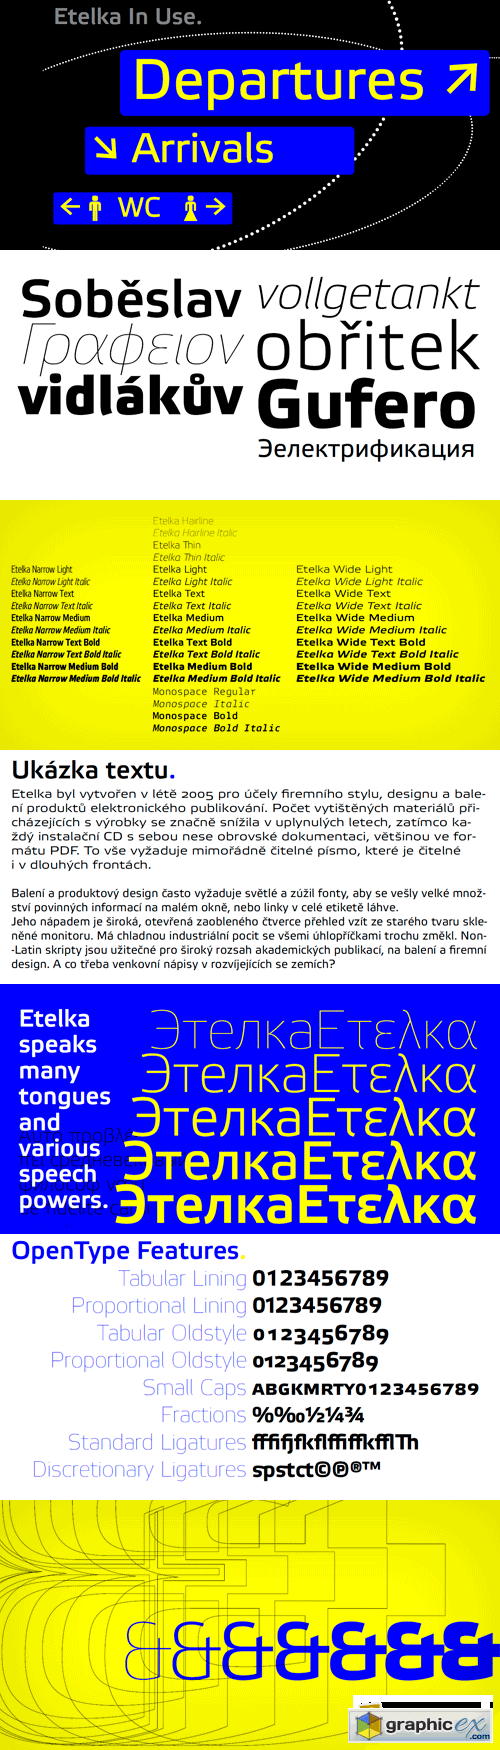 Etelka Font Family - 34 Fonts for $504